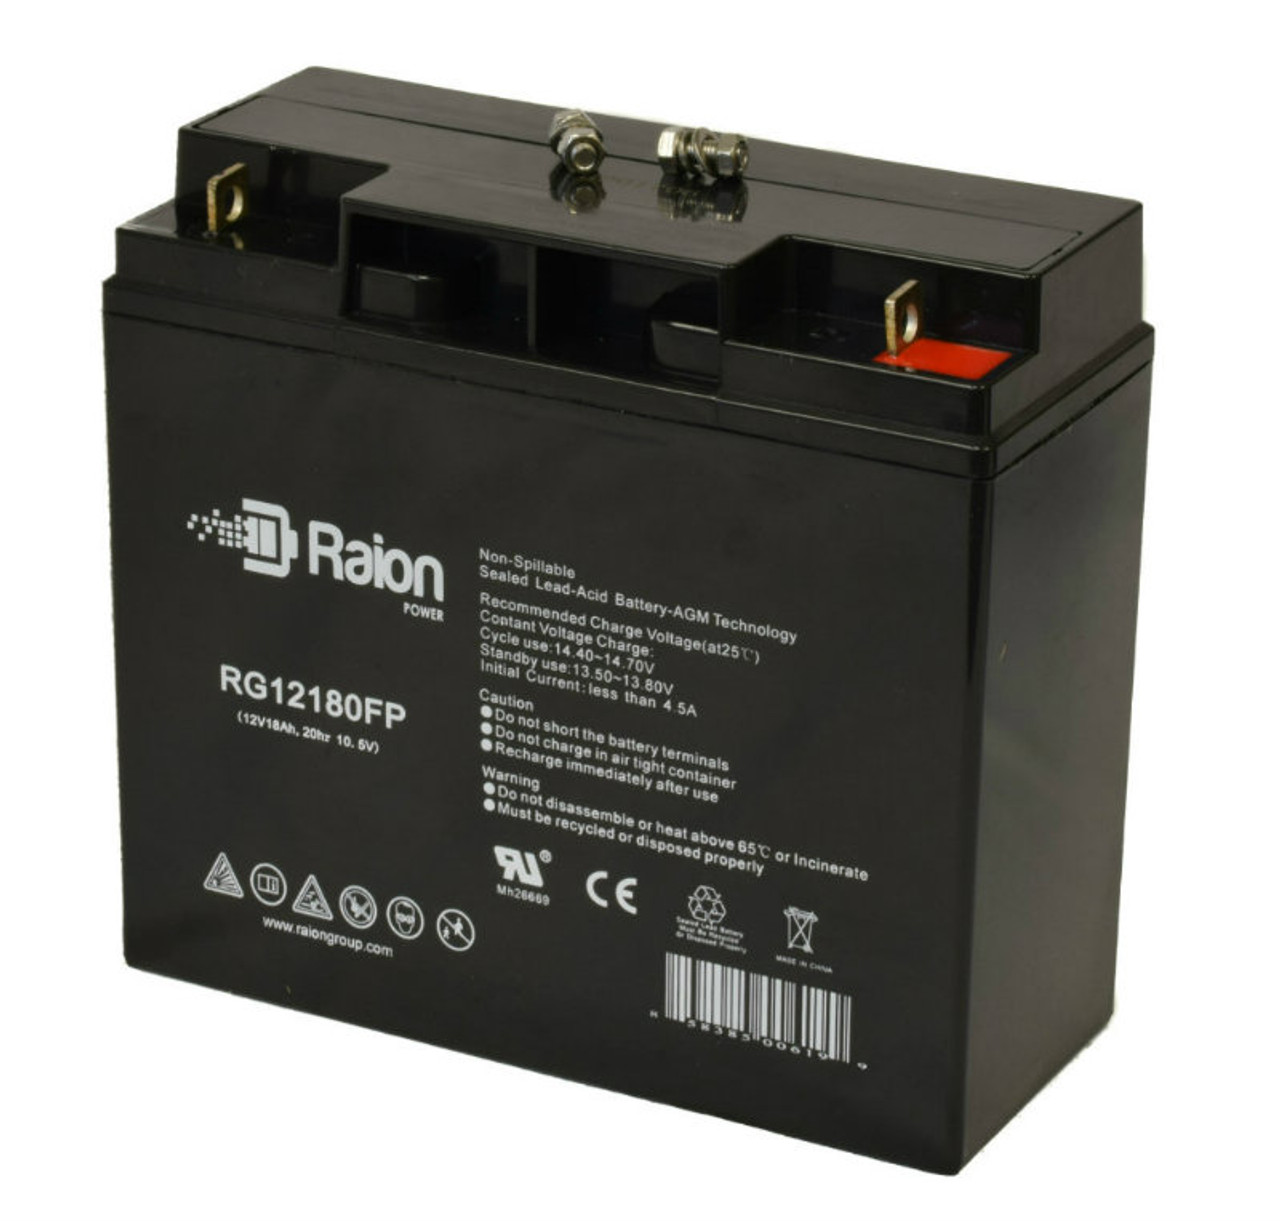 Raion Power Replacement 12V 18Ah Battery for Firman 9400/7500 Watt T07571 Portable Generator - 1 Pack